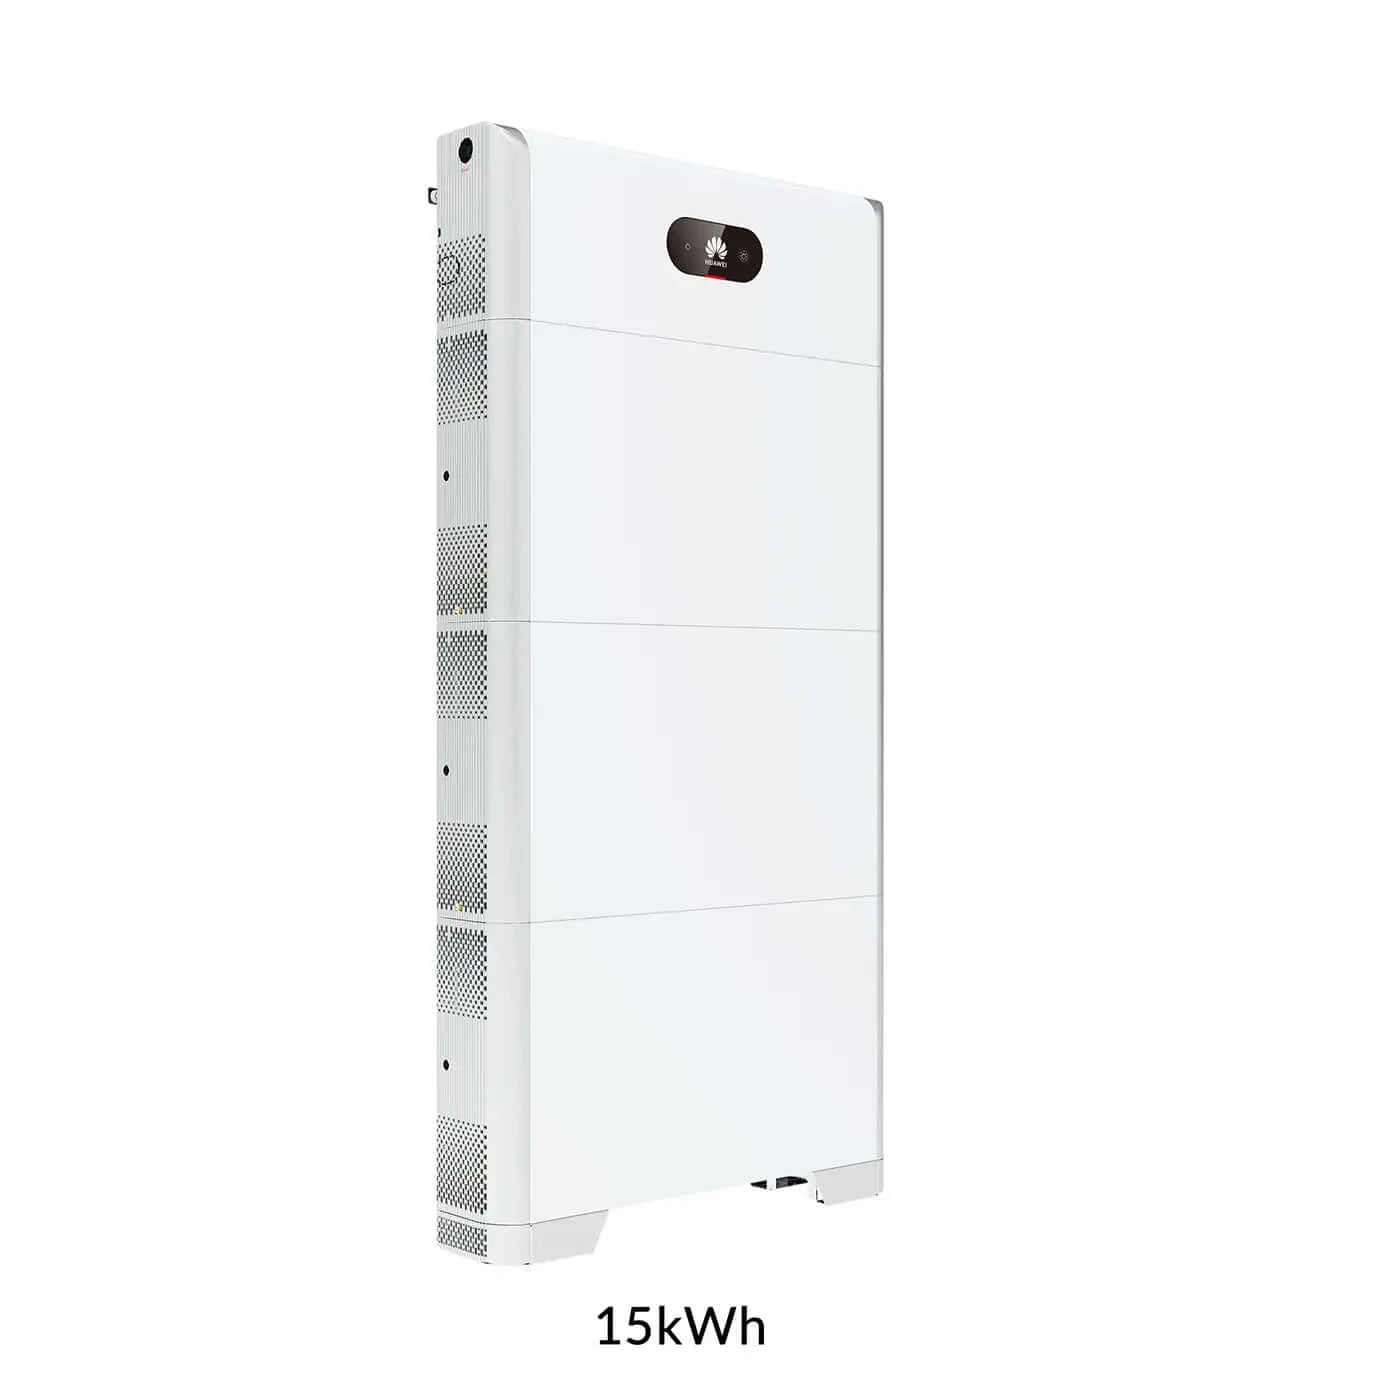 HUAWEI LUNA2000-5-C0/E0 PV tápegység/akkumulátormodul – Mini Power